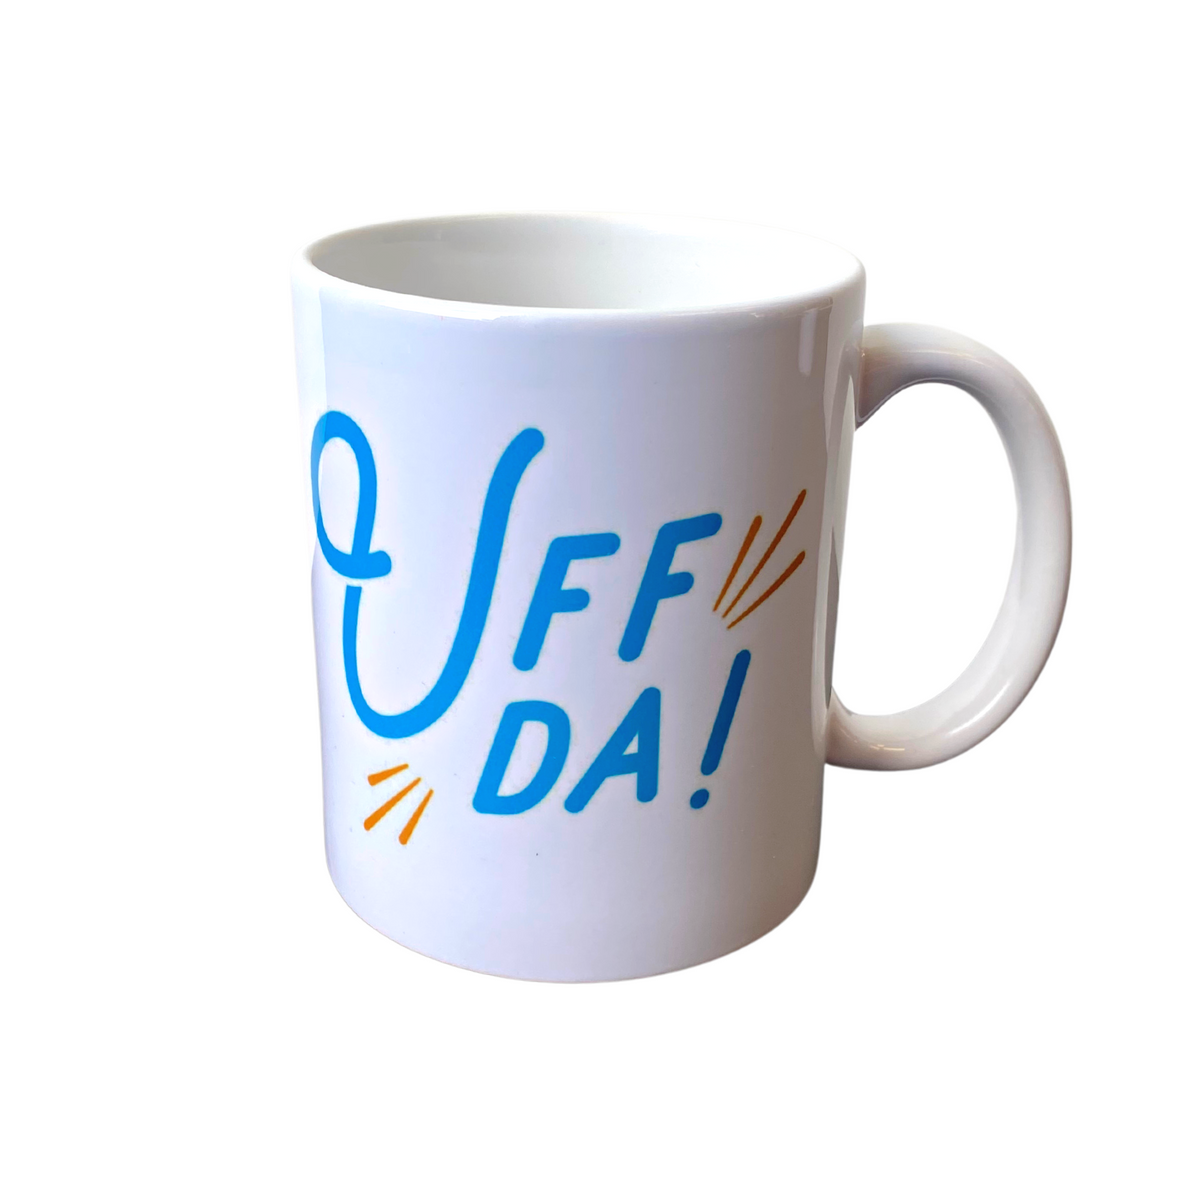 Uff Da! Coffee Mug